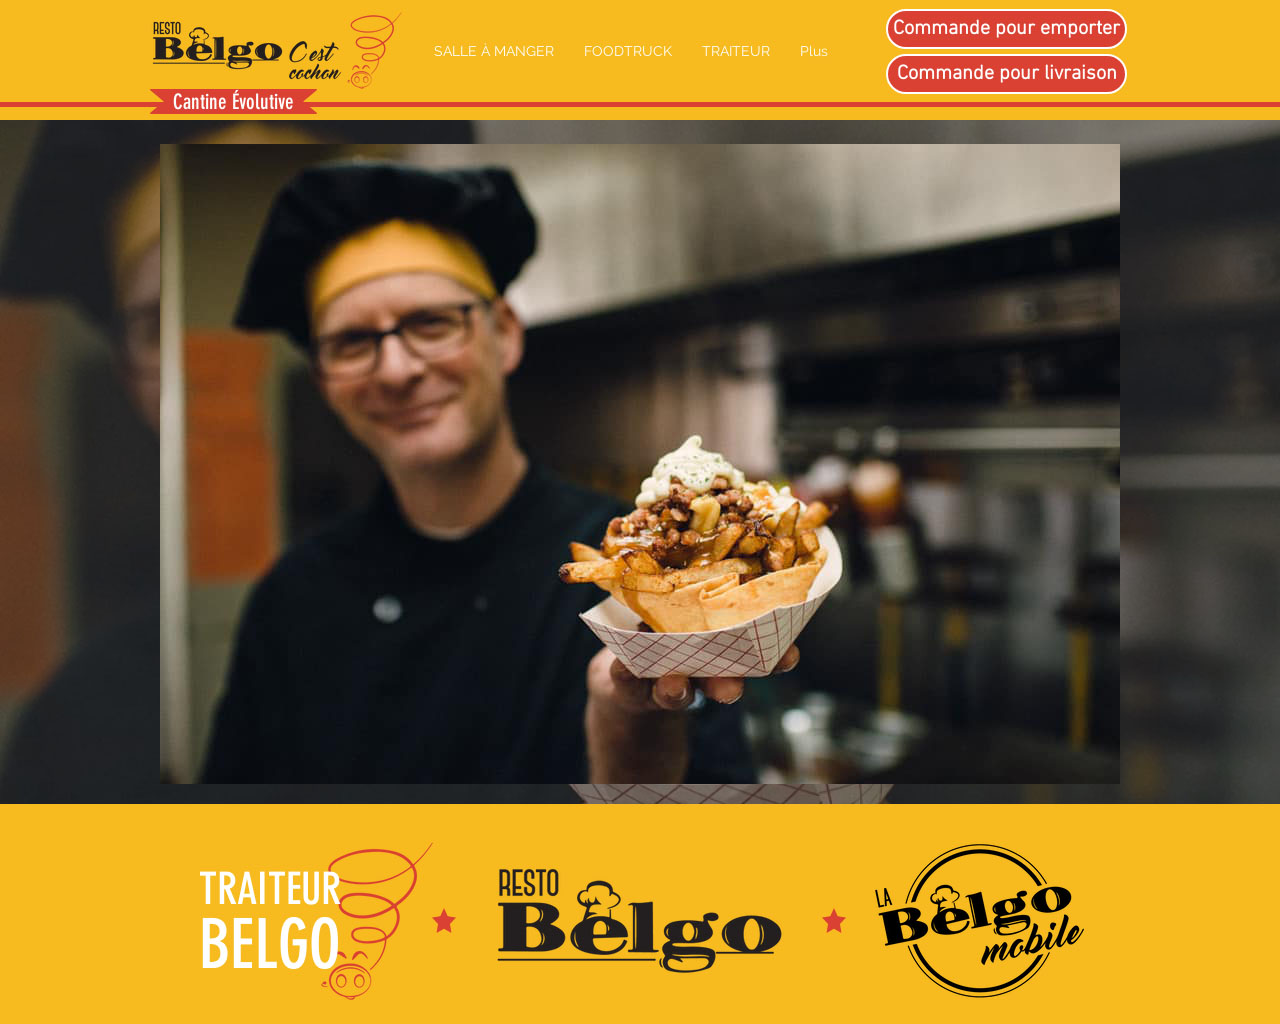 Resto Belgo - Poutine Traiteur Foodtruck